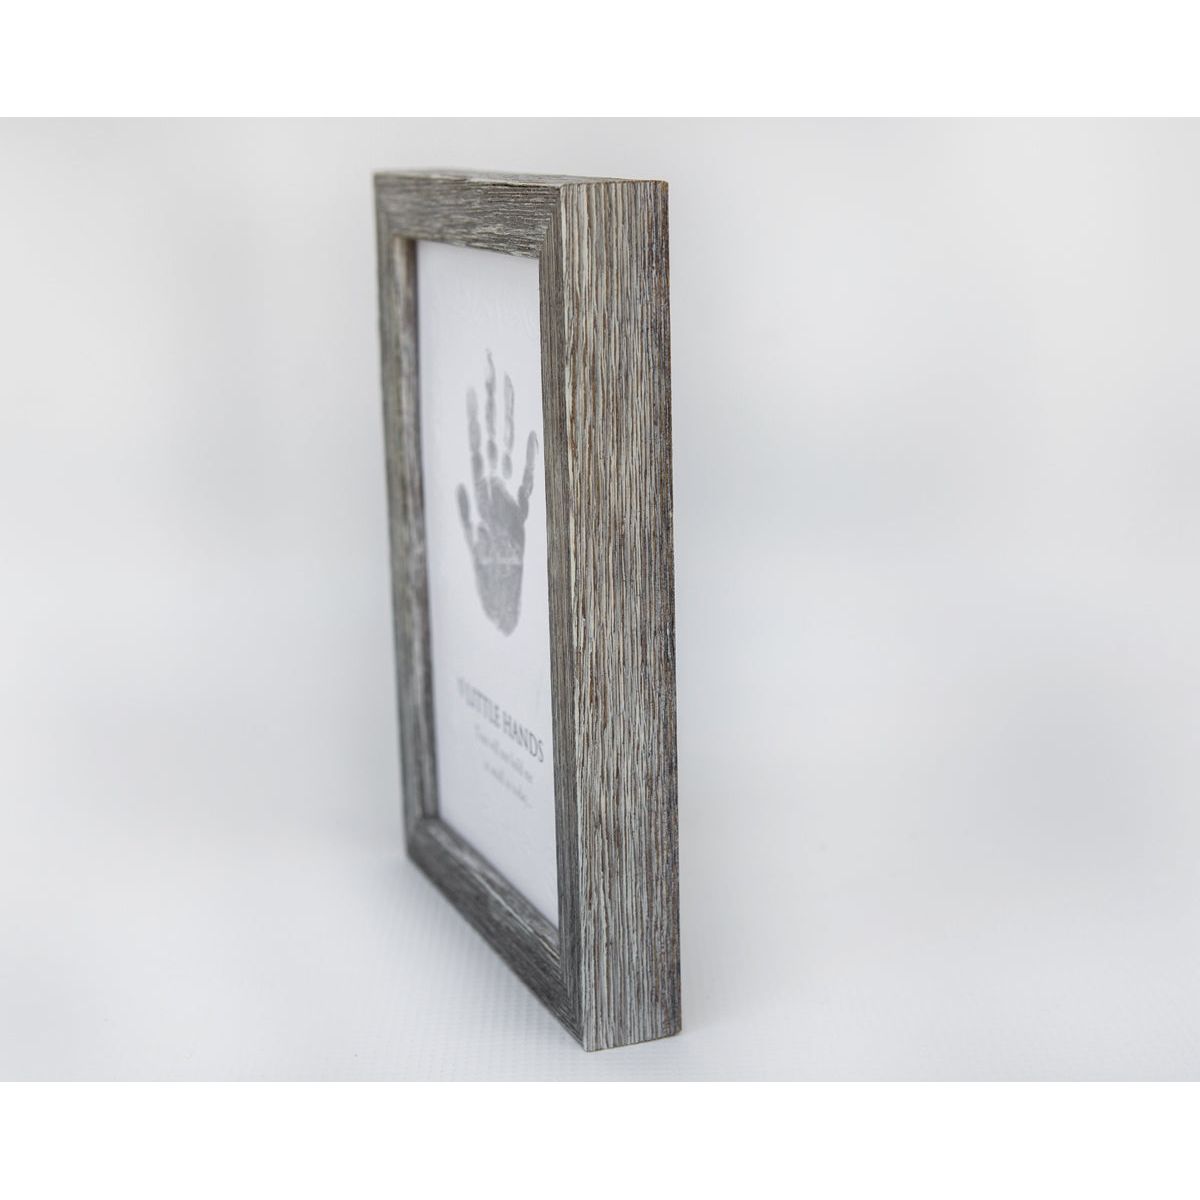 Dedication Frame: Handprint Keepsake 5x7